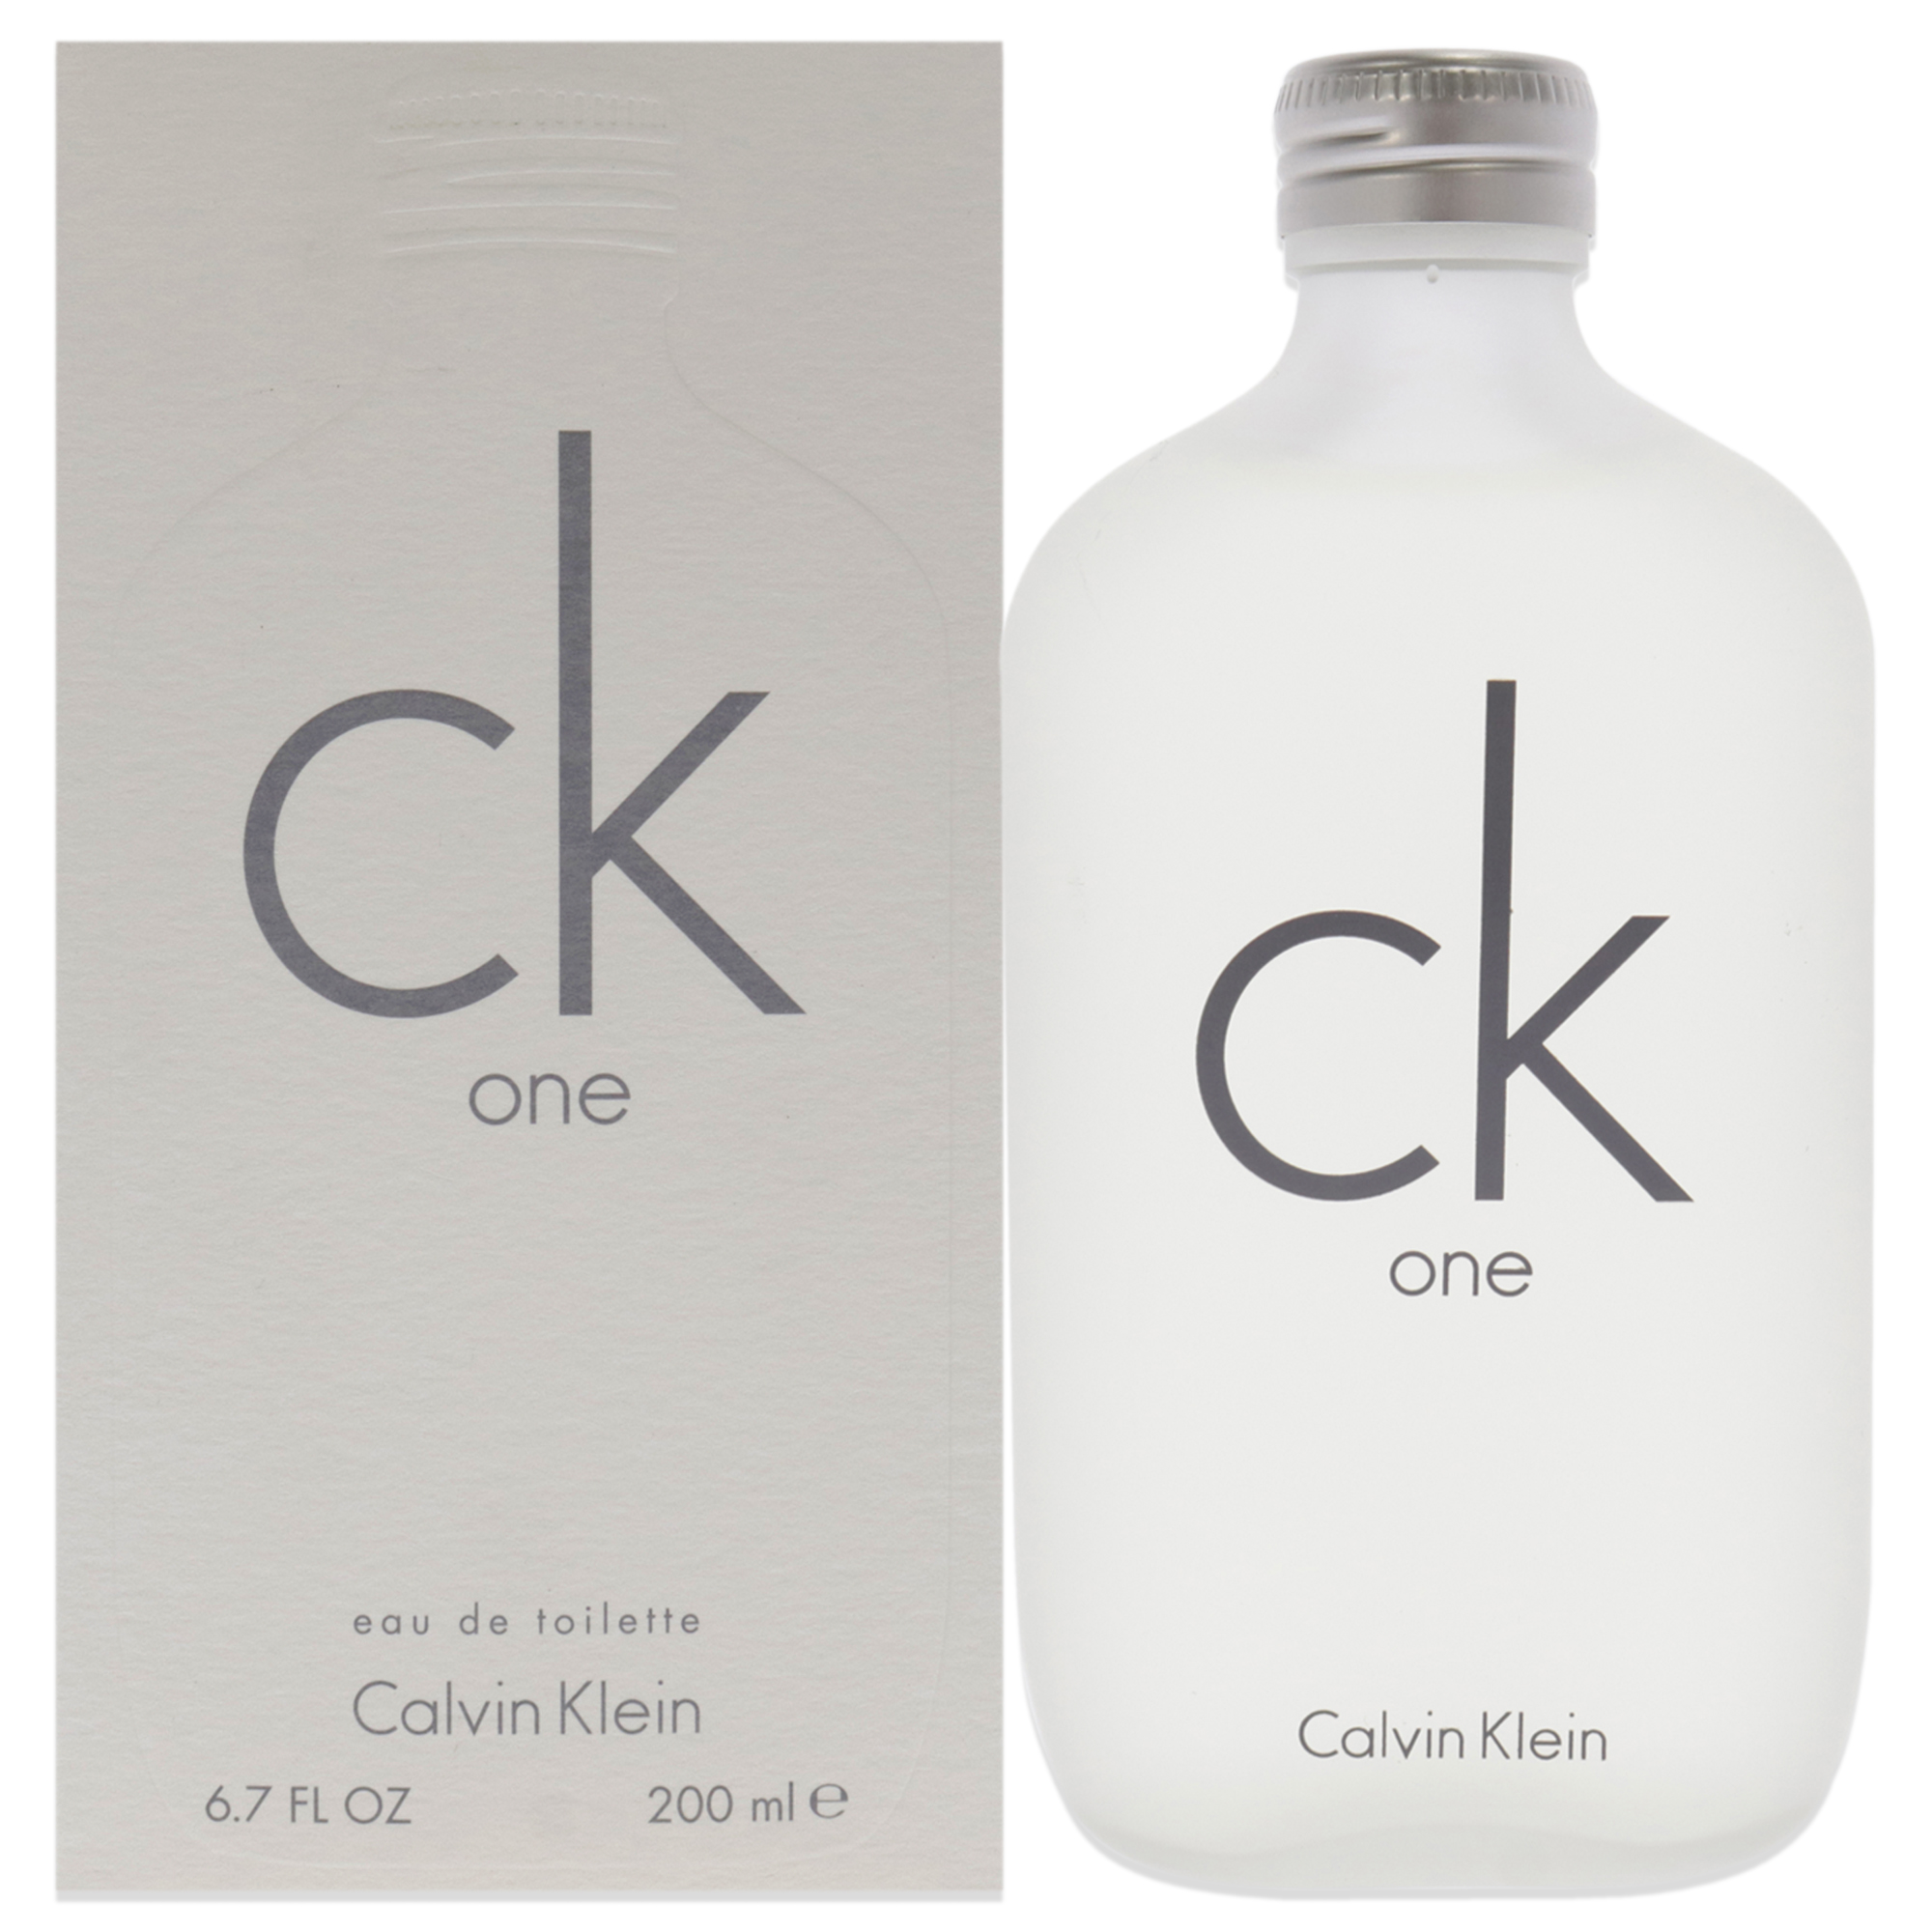 CK One by Calvin Klein for Unisex